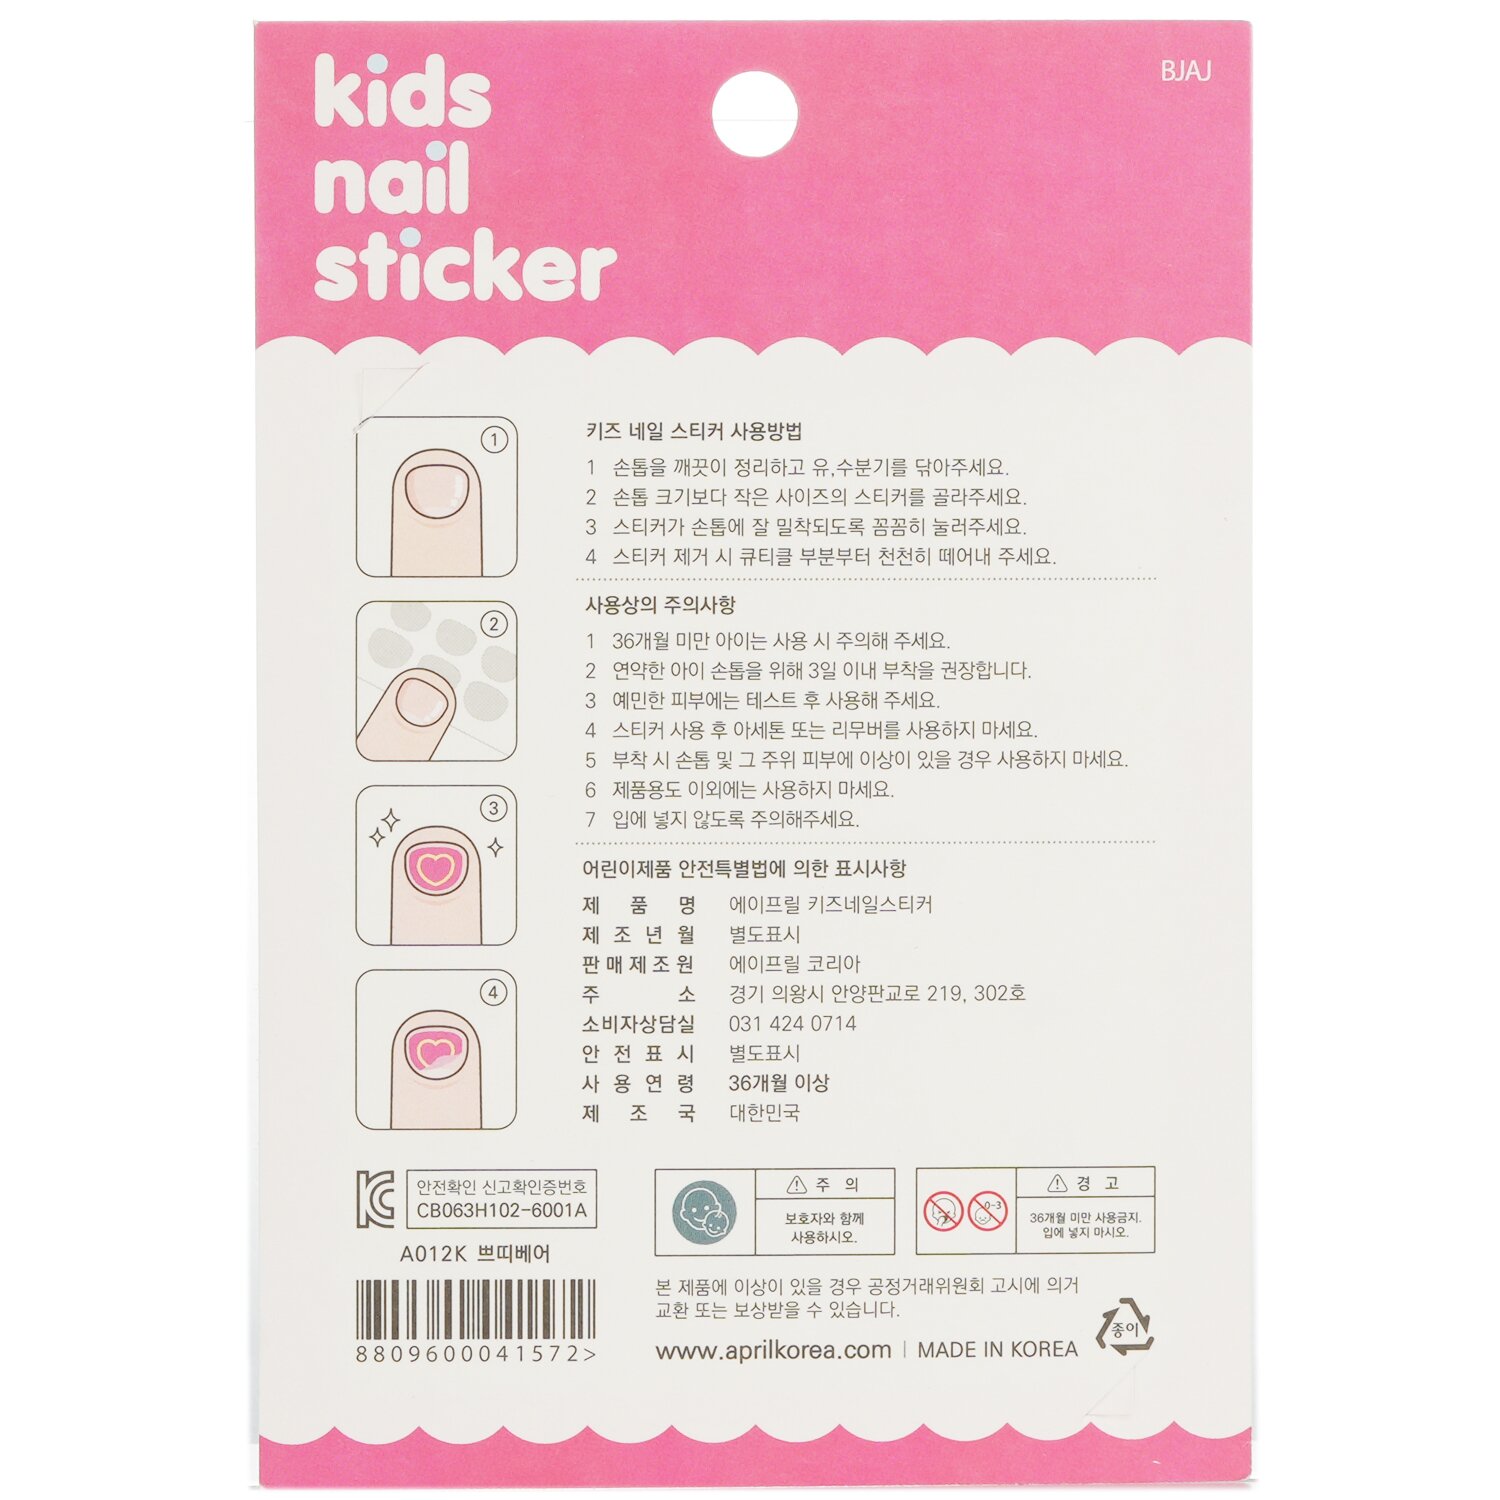 April Korea April Kids Nail Sticker 1pack